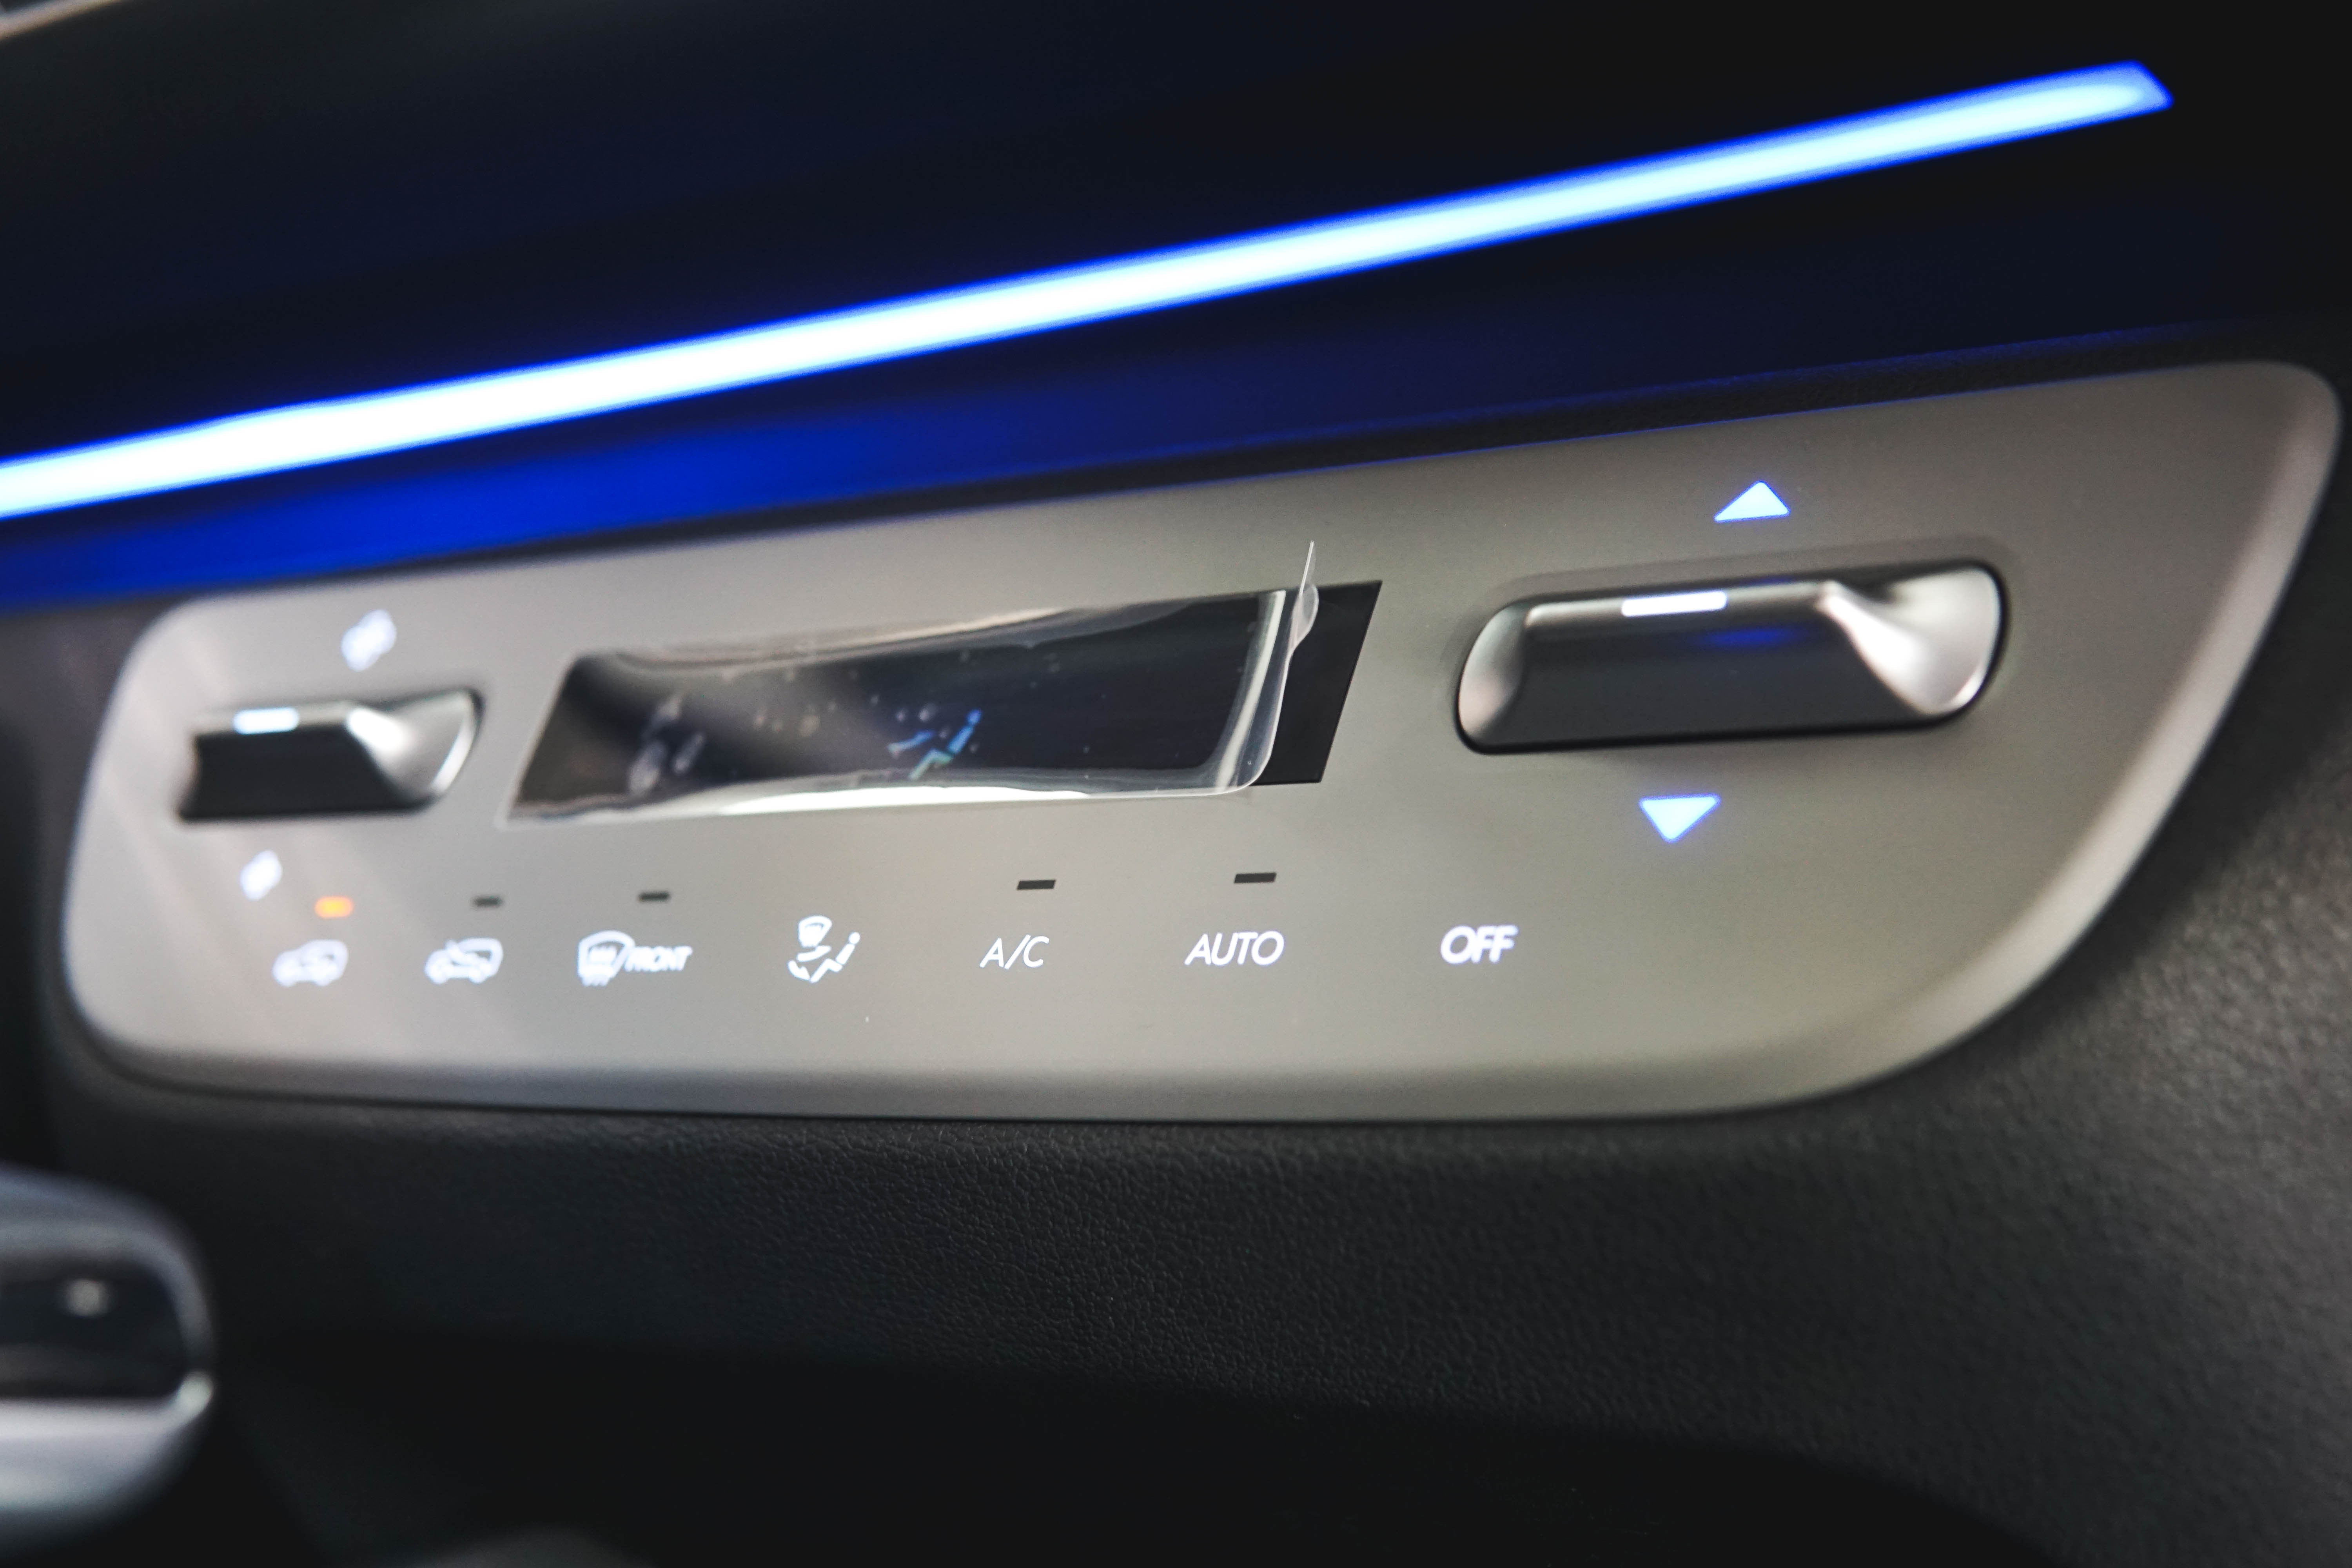 Auto AC Hyundai Pastikan Suhu Kabin Konsisten